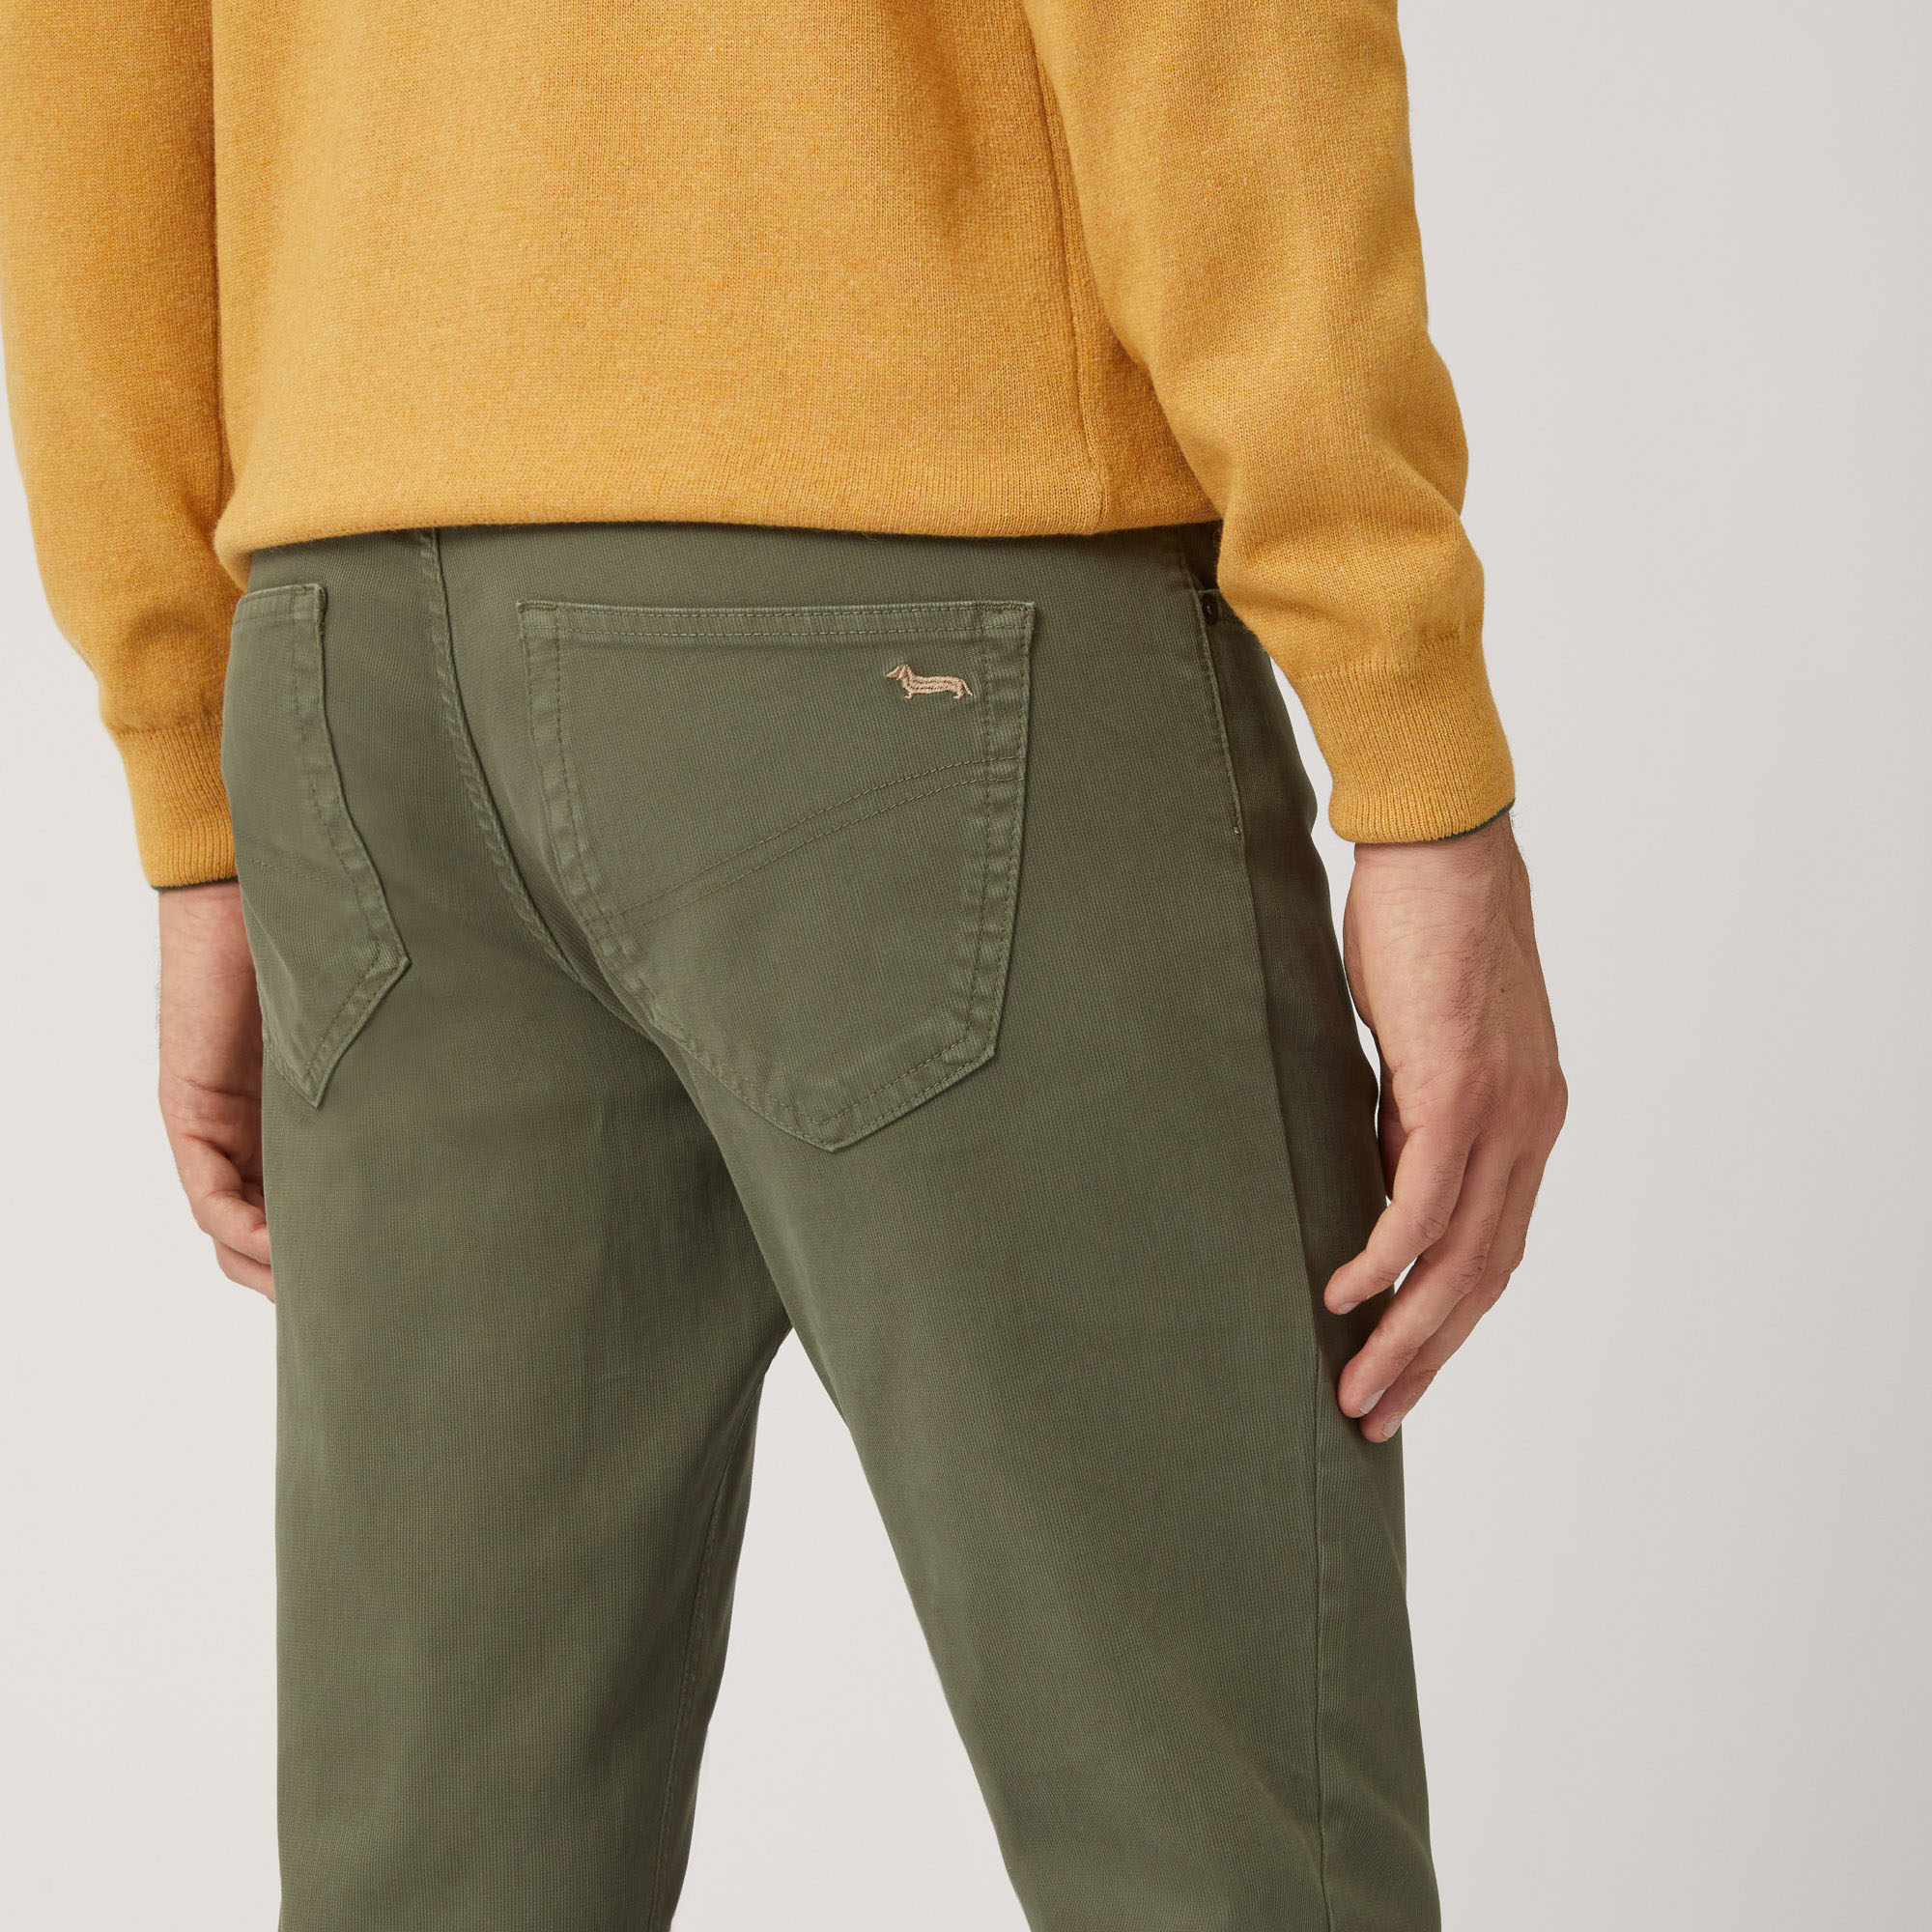 Pantalone Cinque Tasche Narrow Fit, Verde Oliva, large